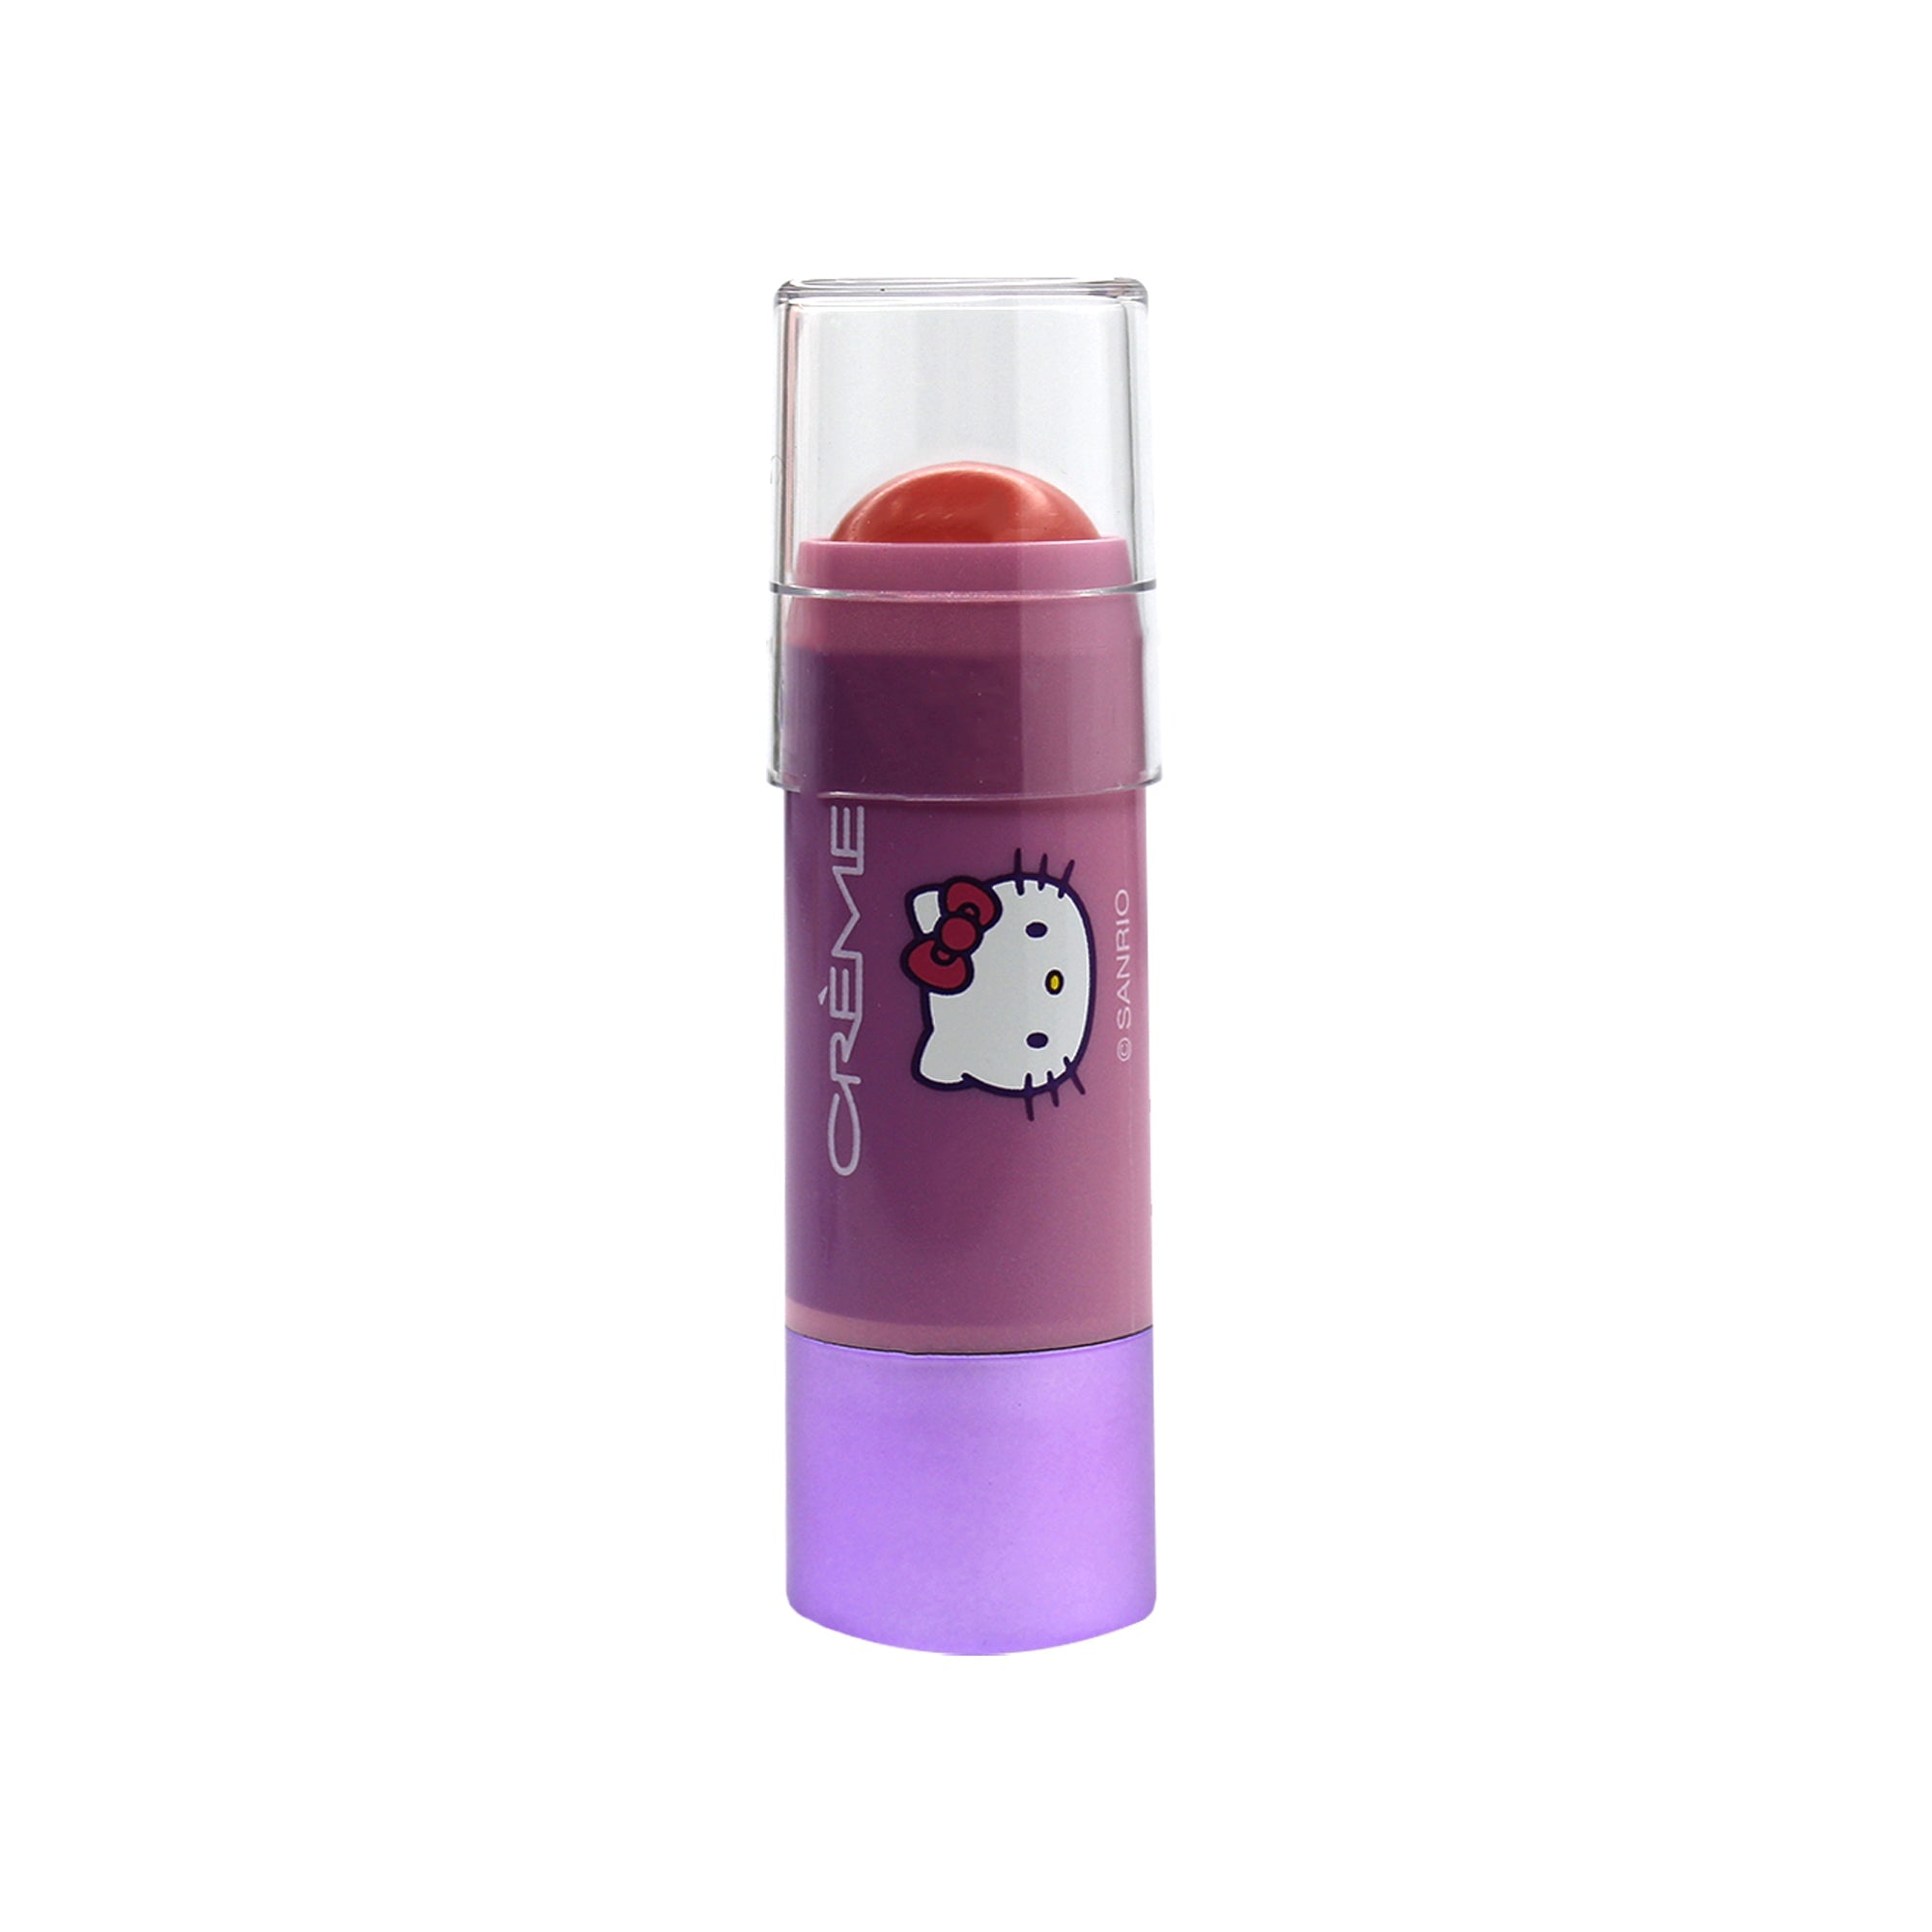 The Crème Shop x Hello Kitty(Purple) 2-In-1 Lip and Cheek Tinted Stick - Pretty Bow Lip & Cheek Chic Stick The Crème Shop x Sanrio 